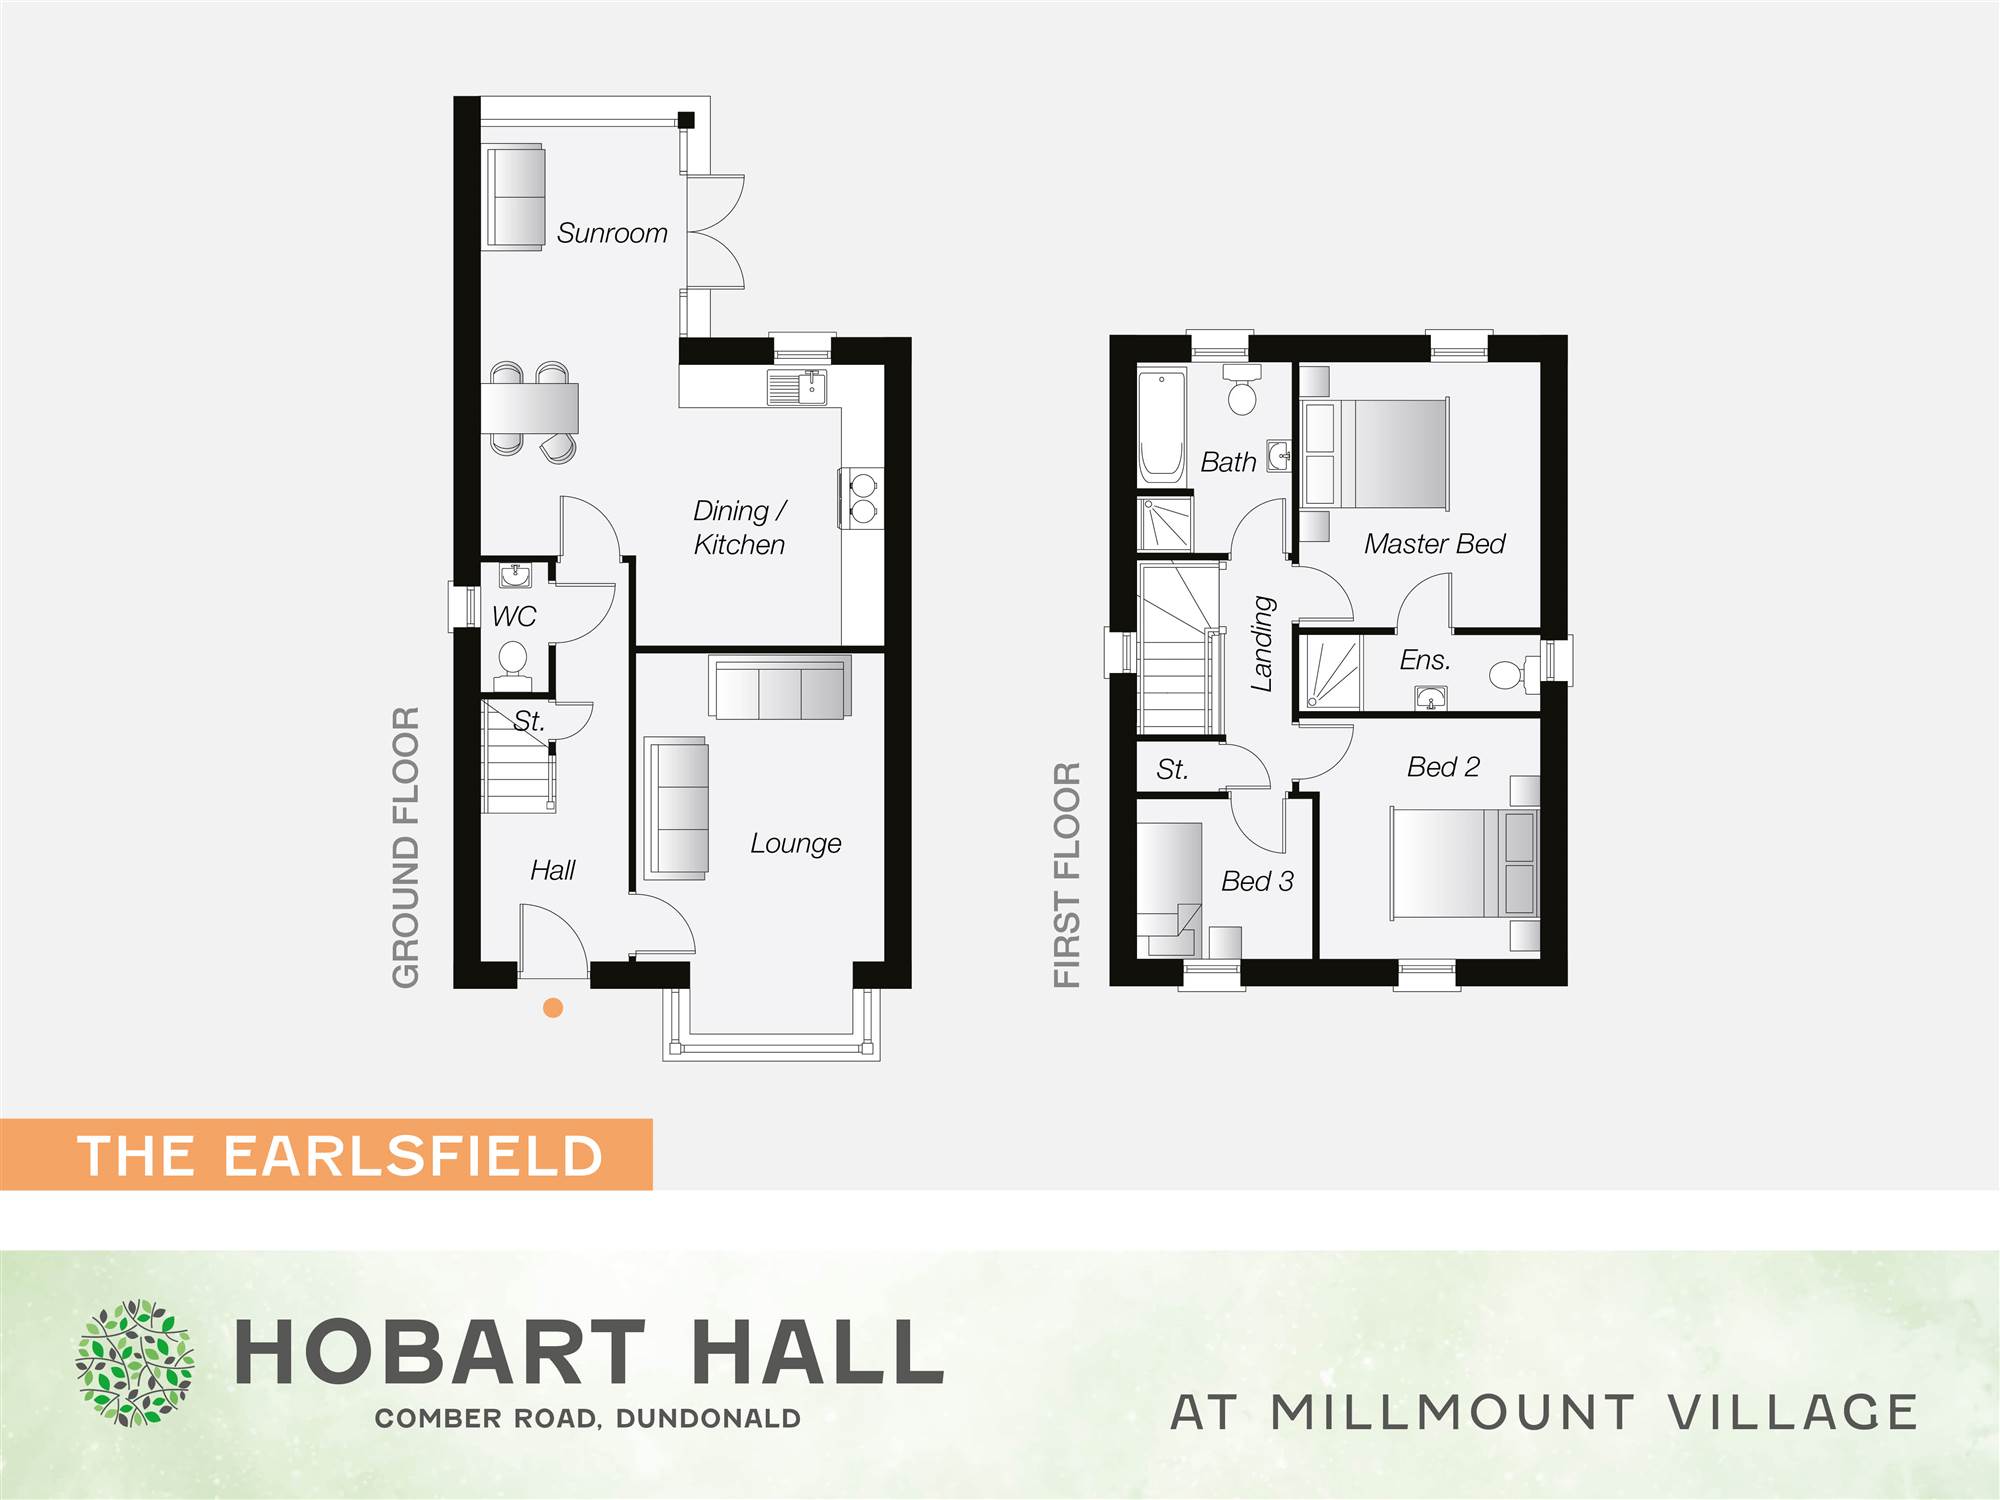 5 Hobart Hall at Millmount Village